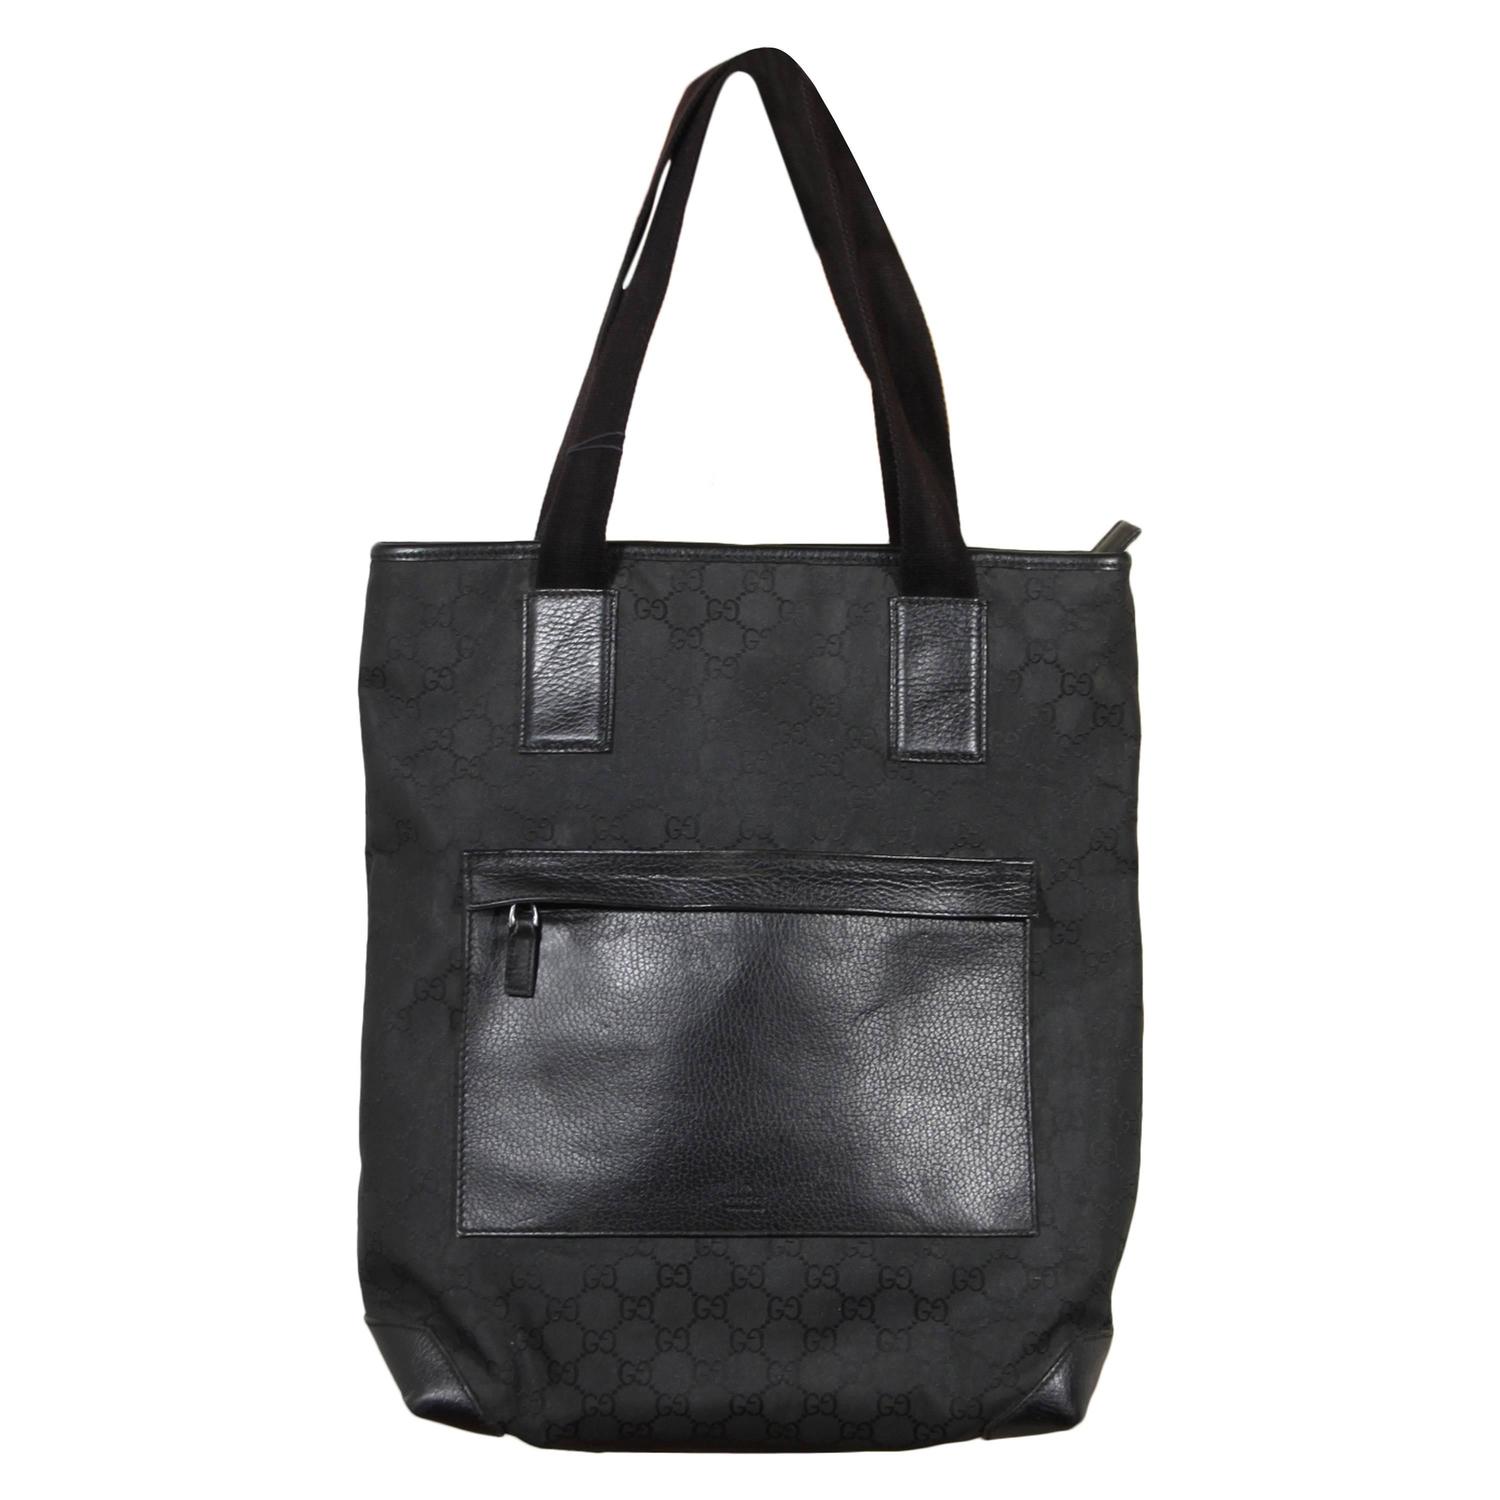 GUCCI Italian Black GG MONOGRAM Canvas TOTE Handbag SHOPPING BAG For Sale at 1stdibs